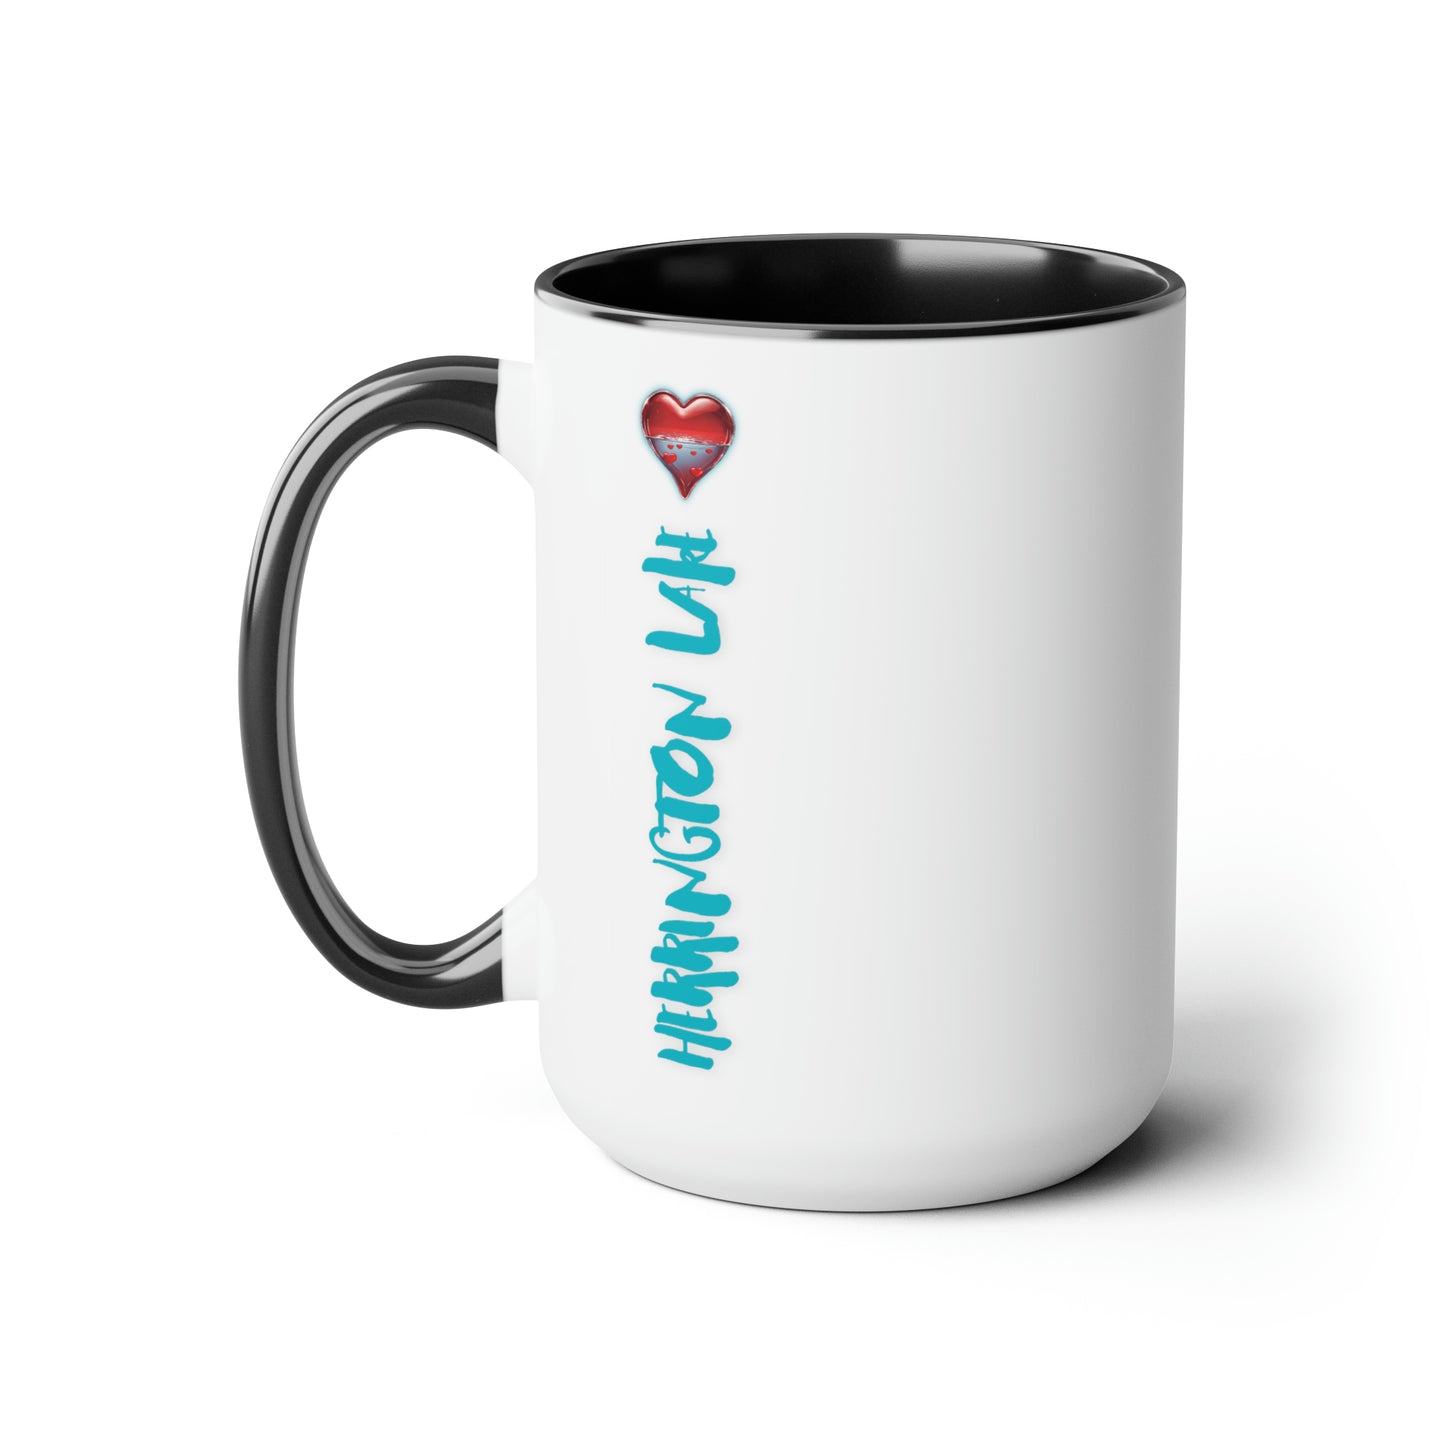 "Herrington Has My Heart" Two-Tone Biggie Coffee Mugs, 15oz